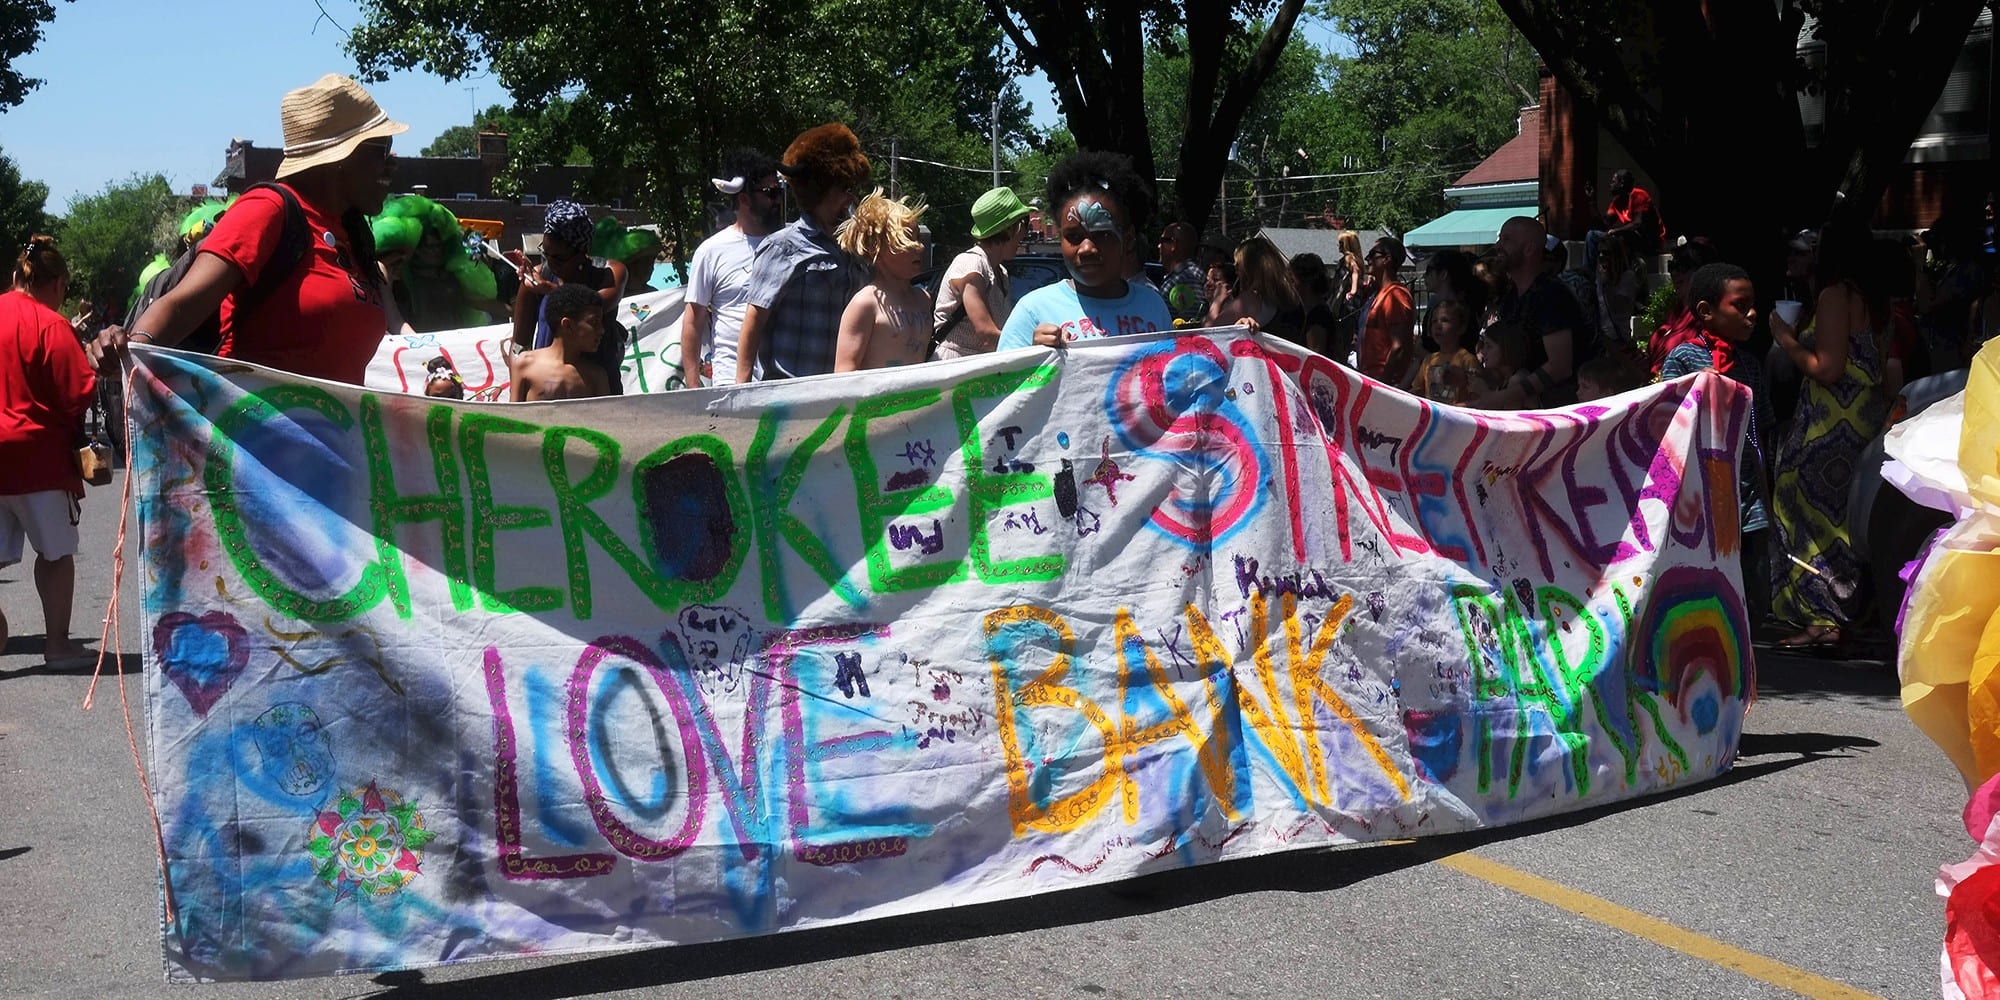 Cherokee Street Reach and their Love Bank Park banner. Photo by Paul Sableman.